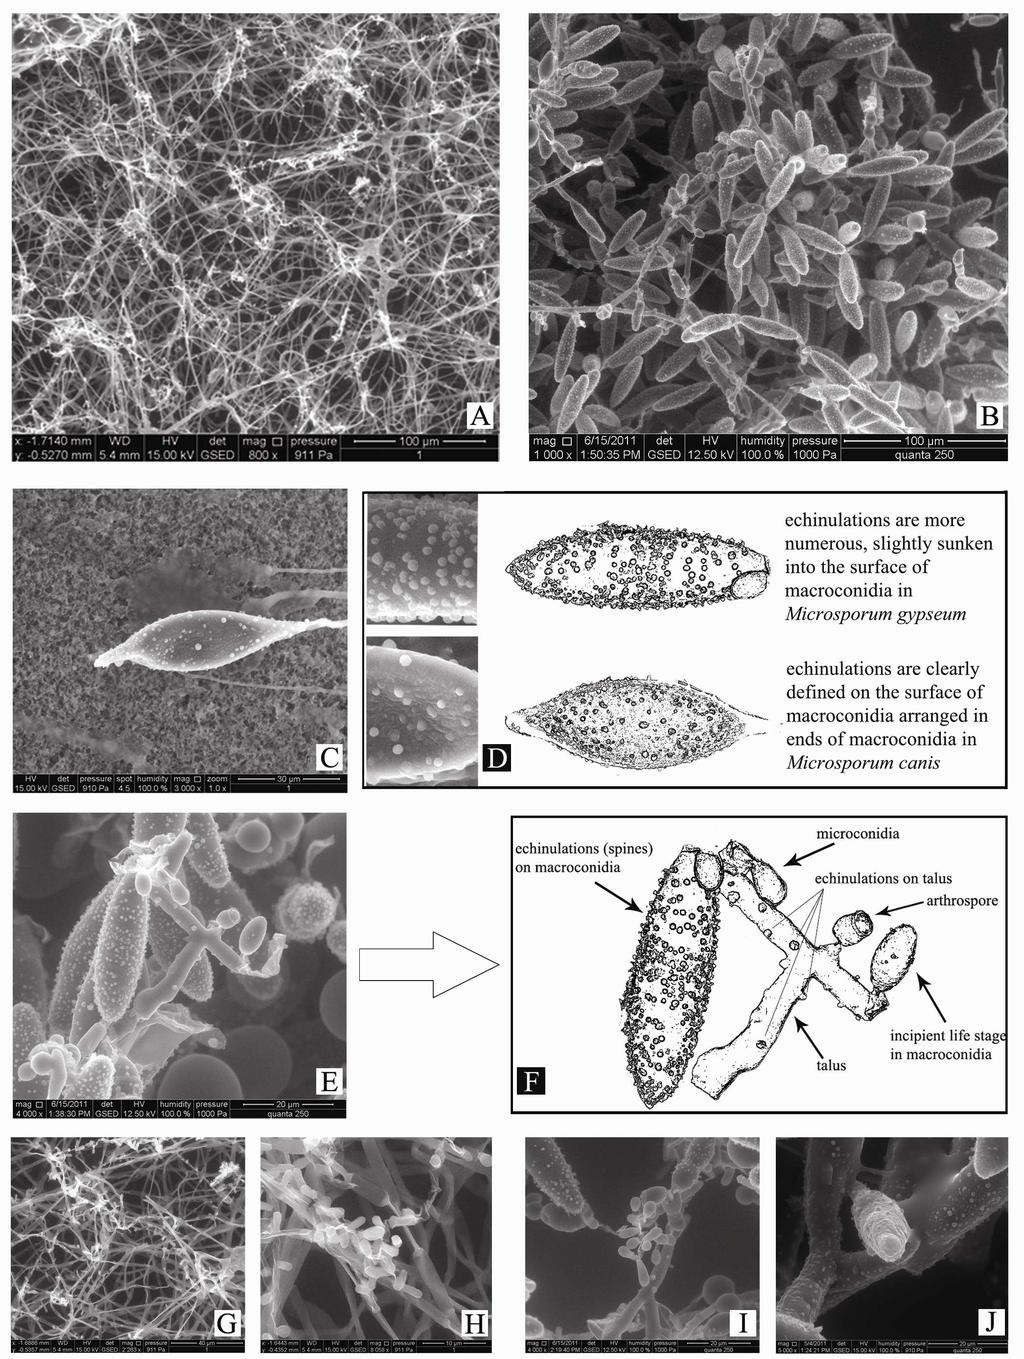 Fig.2 General aspect of Microsporum canis (A) /Microsporum gypseum (B) mycelium. Macroconidia in Microsporum canis(c) and Microsporum gypseum(e). G-H talus aspect / microconidia in Microsporum canis.